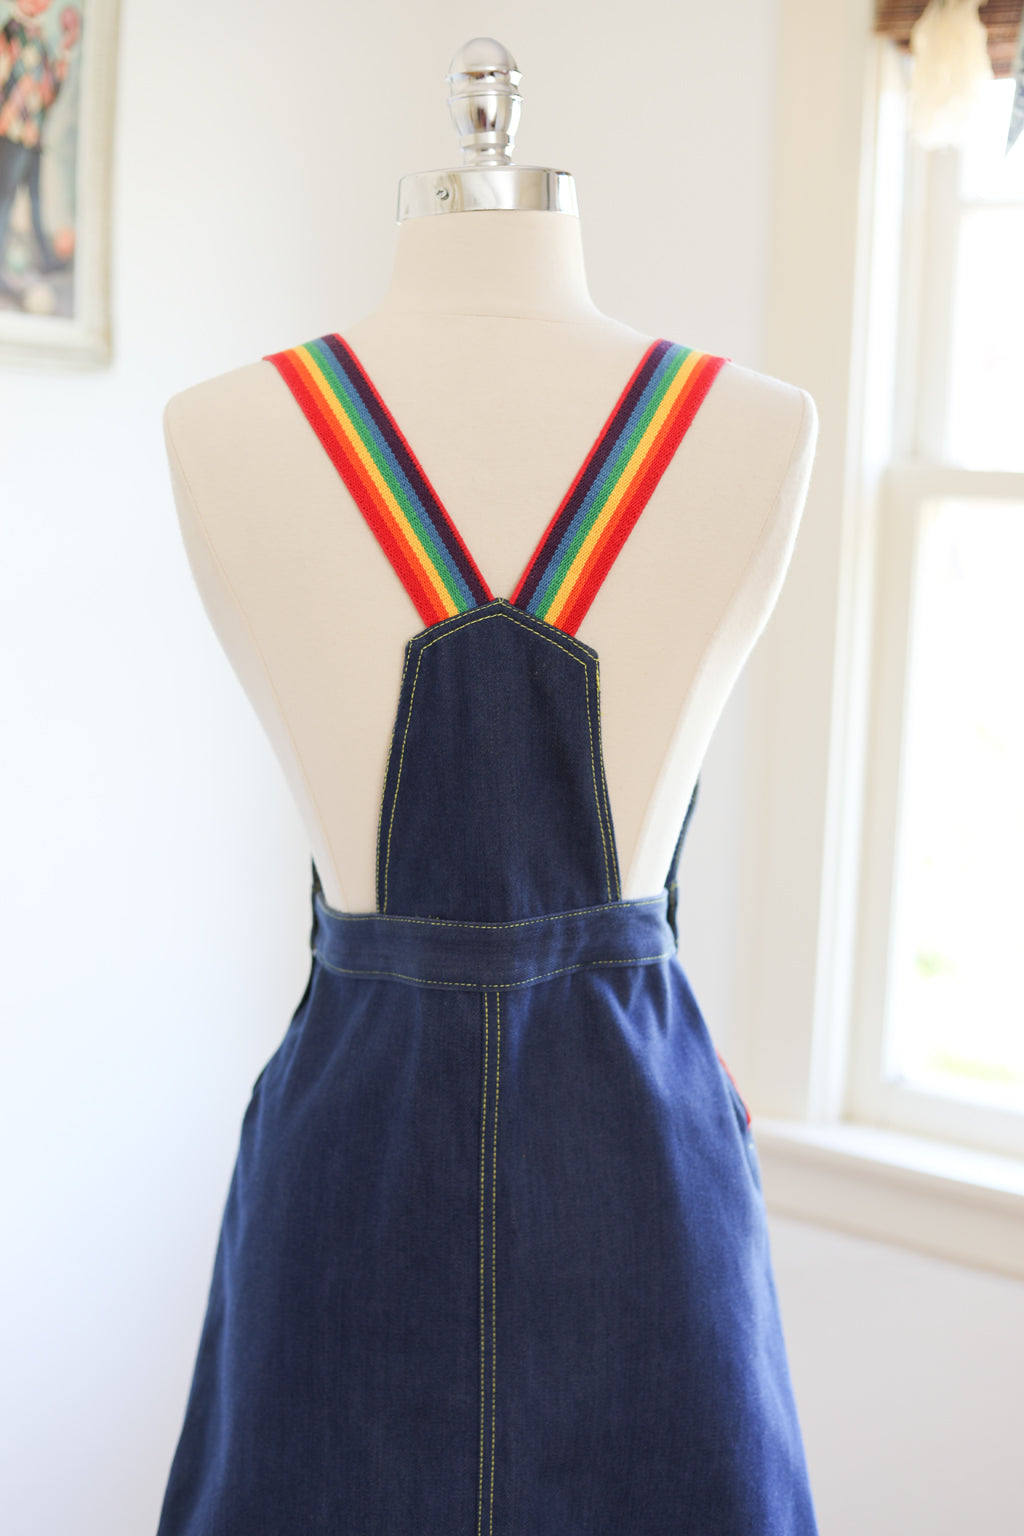 Vintage 1970s Dress - Amazing Hong Kong Denim Jumper Sundress w Rainbow Straps & Sunny Zipper Size XS to S